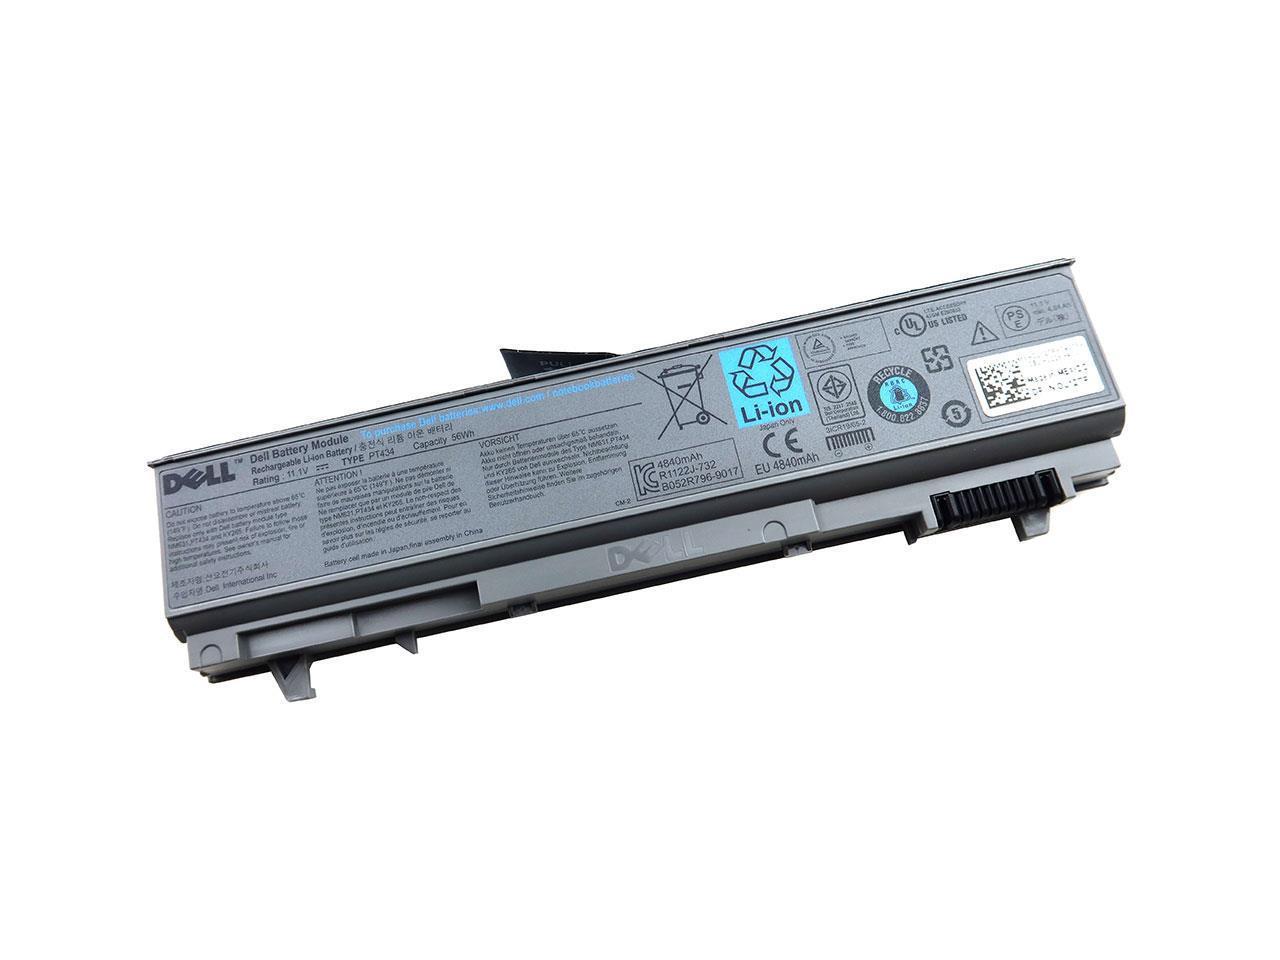 Used - Like New: Genuine Dell Latitude E6400 Precision M2400 4840MAH Laptop Battery U127P Laptop Batteries - Newegg.com